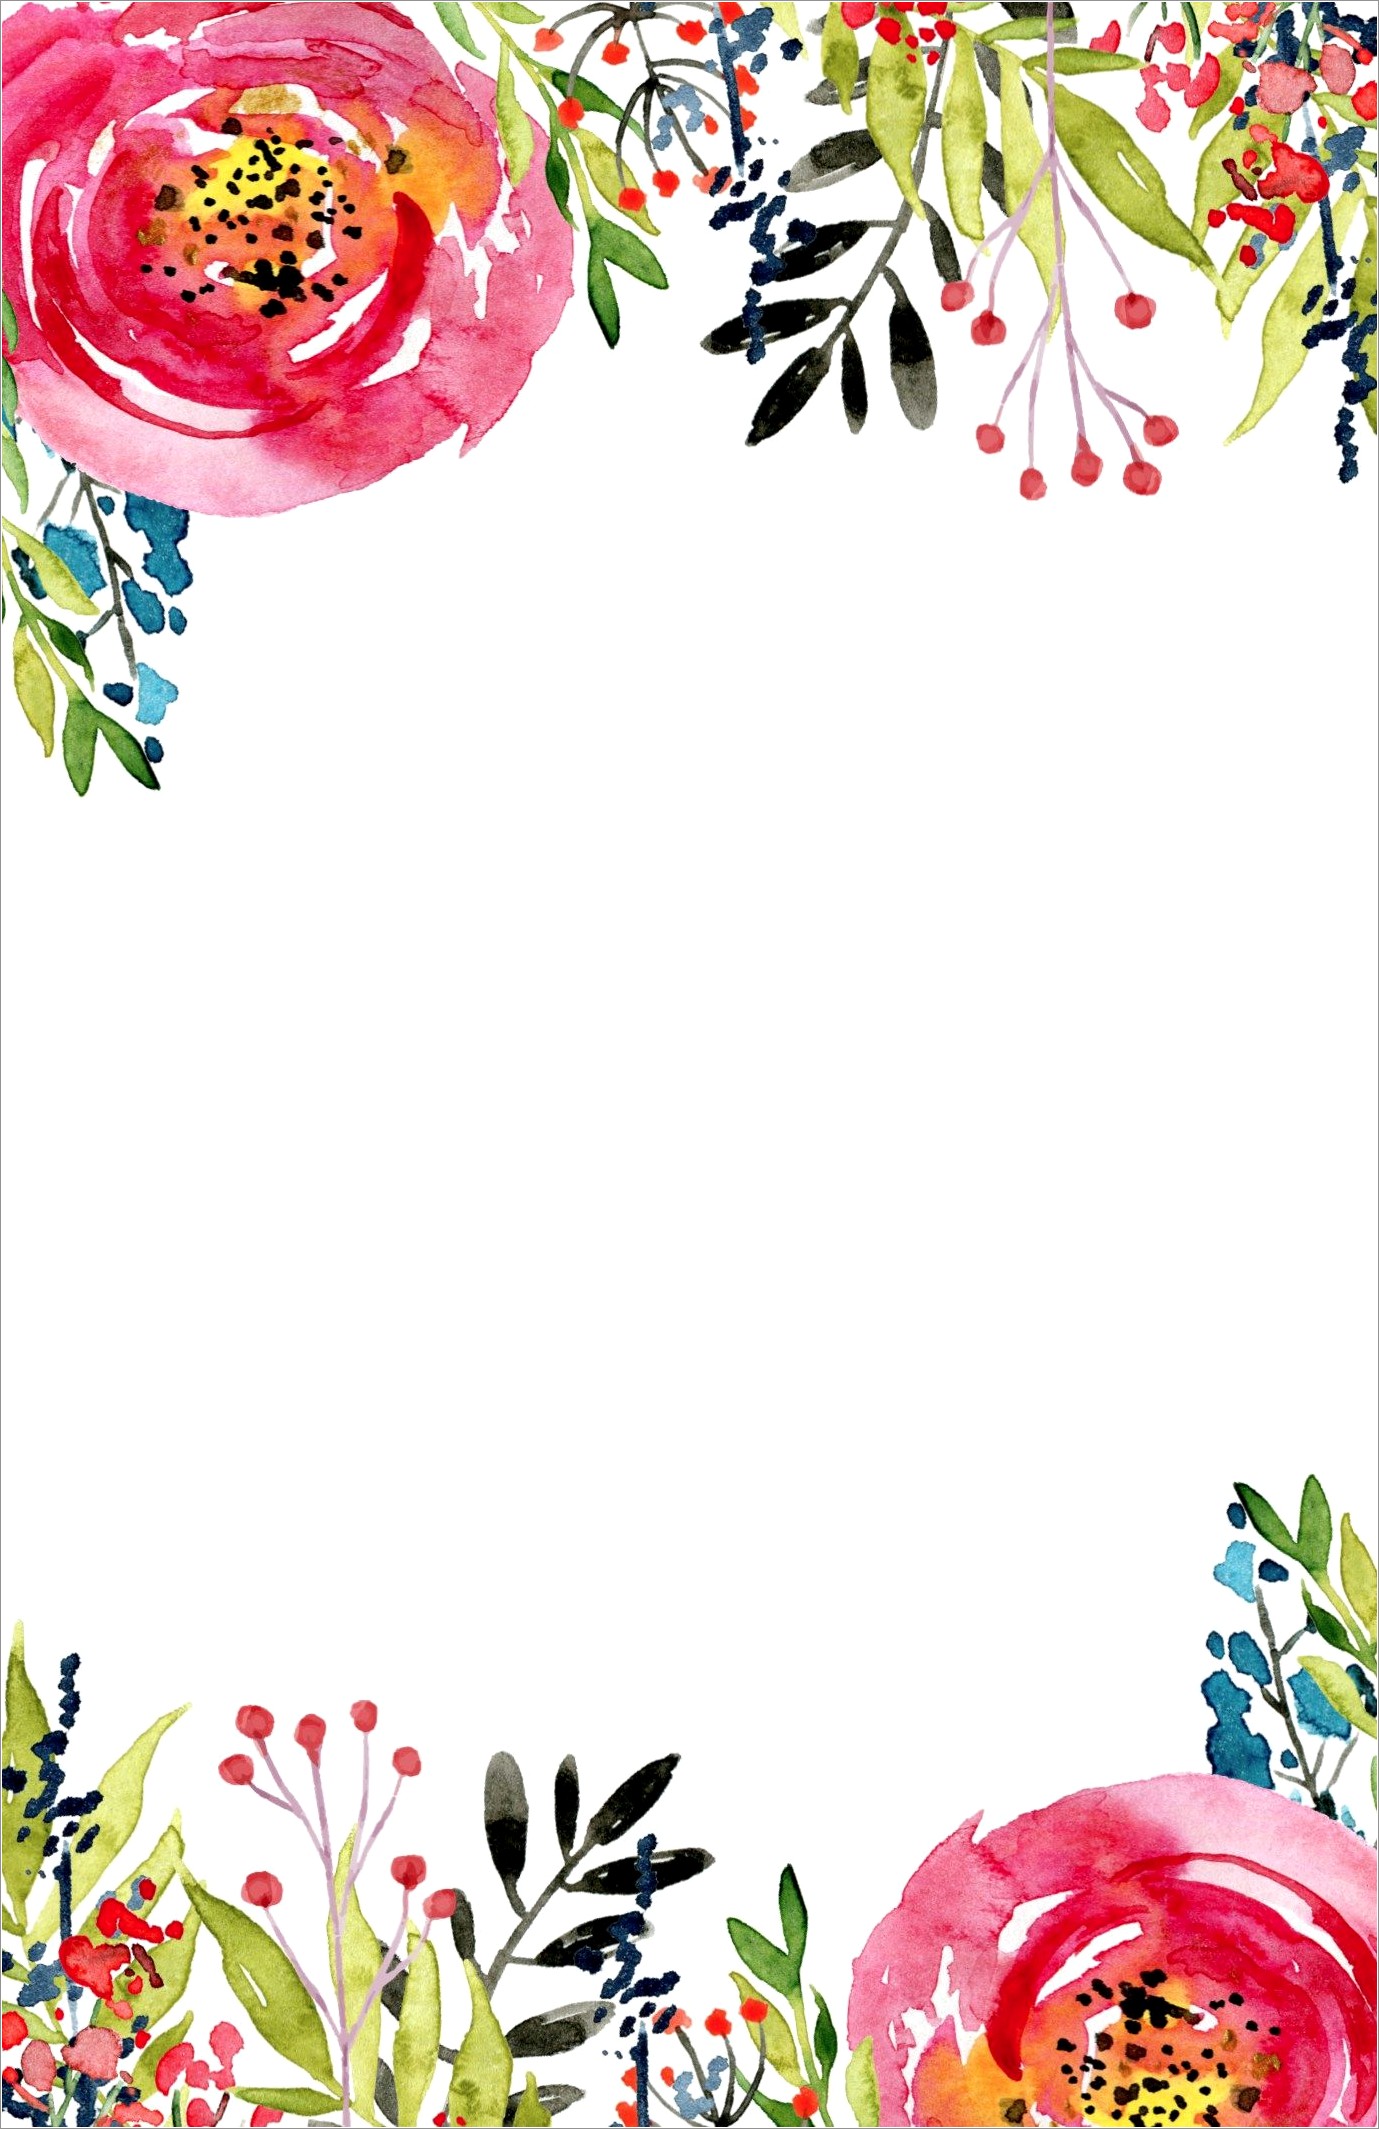 Flower Invitation Background Free Download